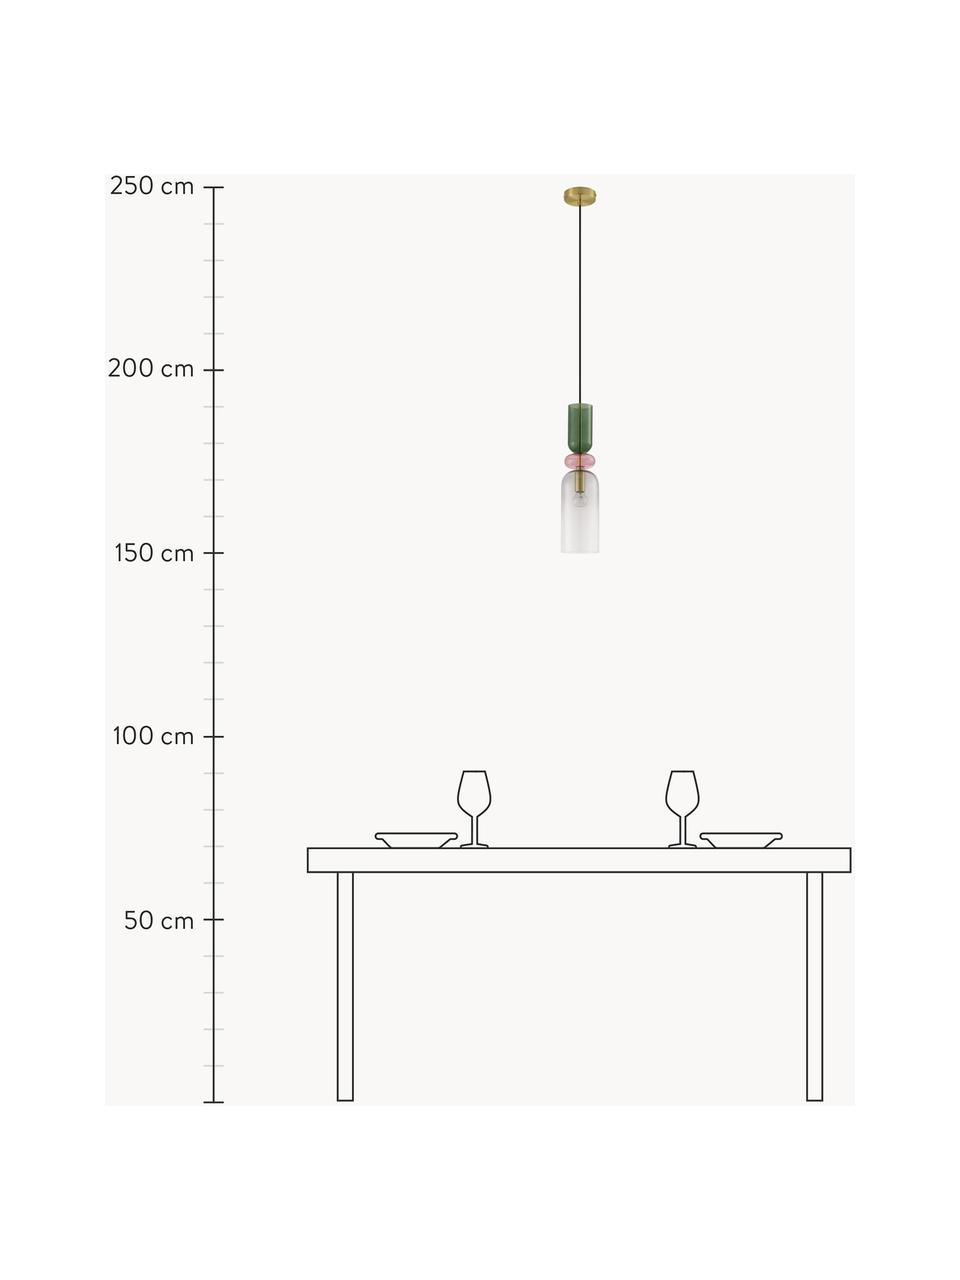 Kleine hanglamp Murano, Goudkleurig, transparant, roze, groen, Ø 11 x H 44 cm